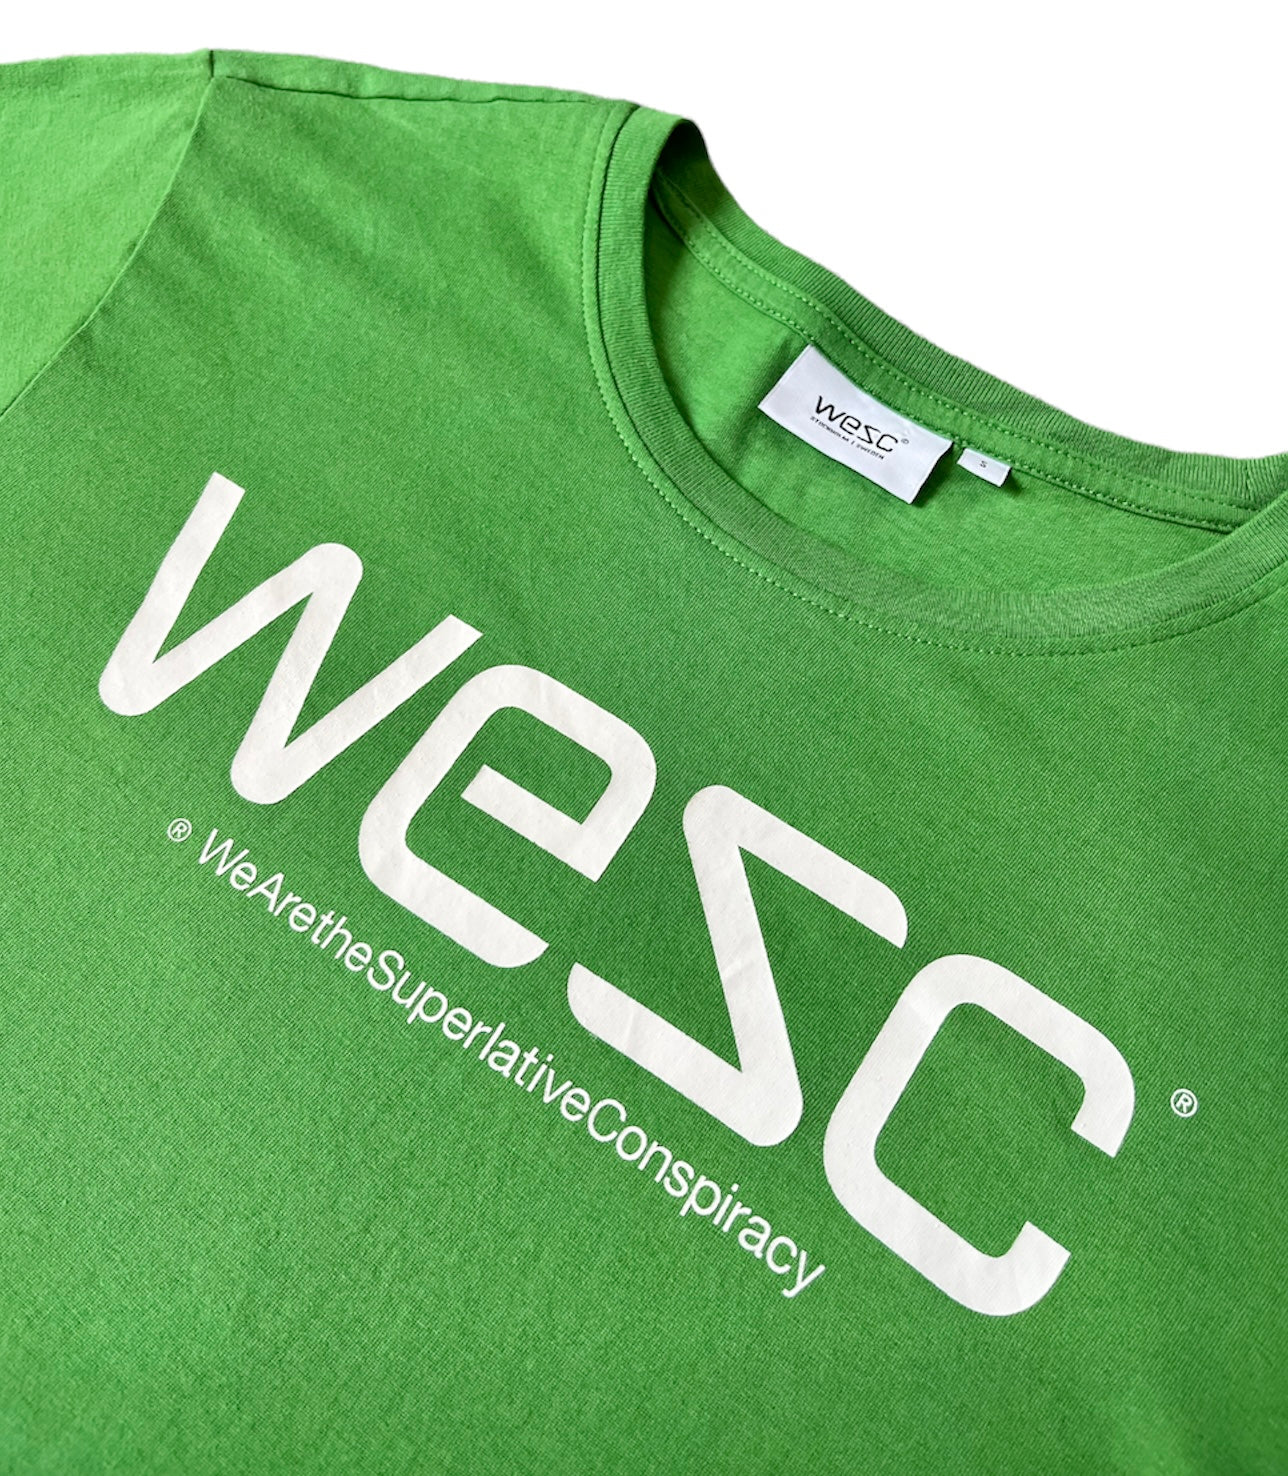 WESC Logo T Shirt Green - Small